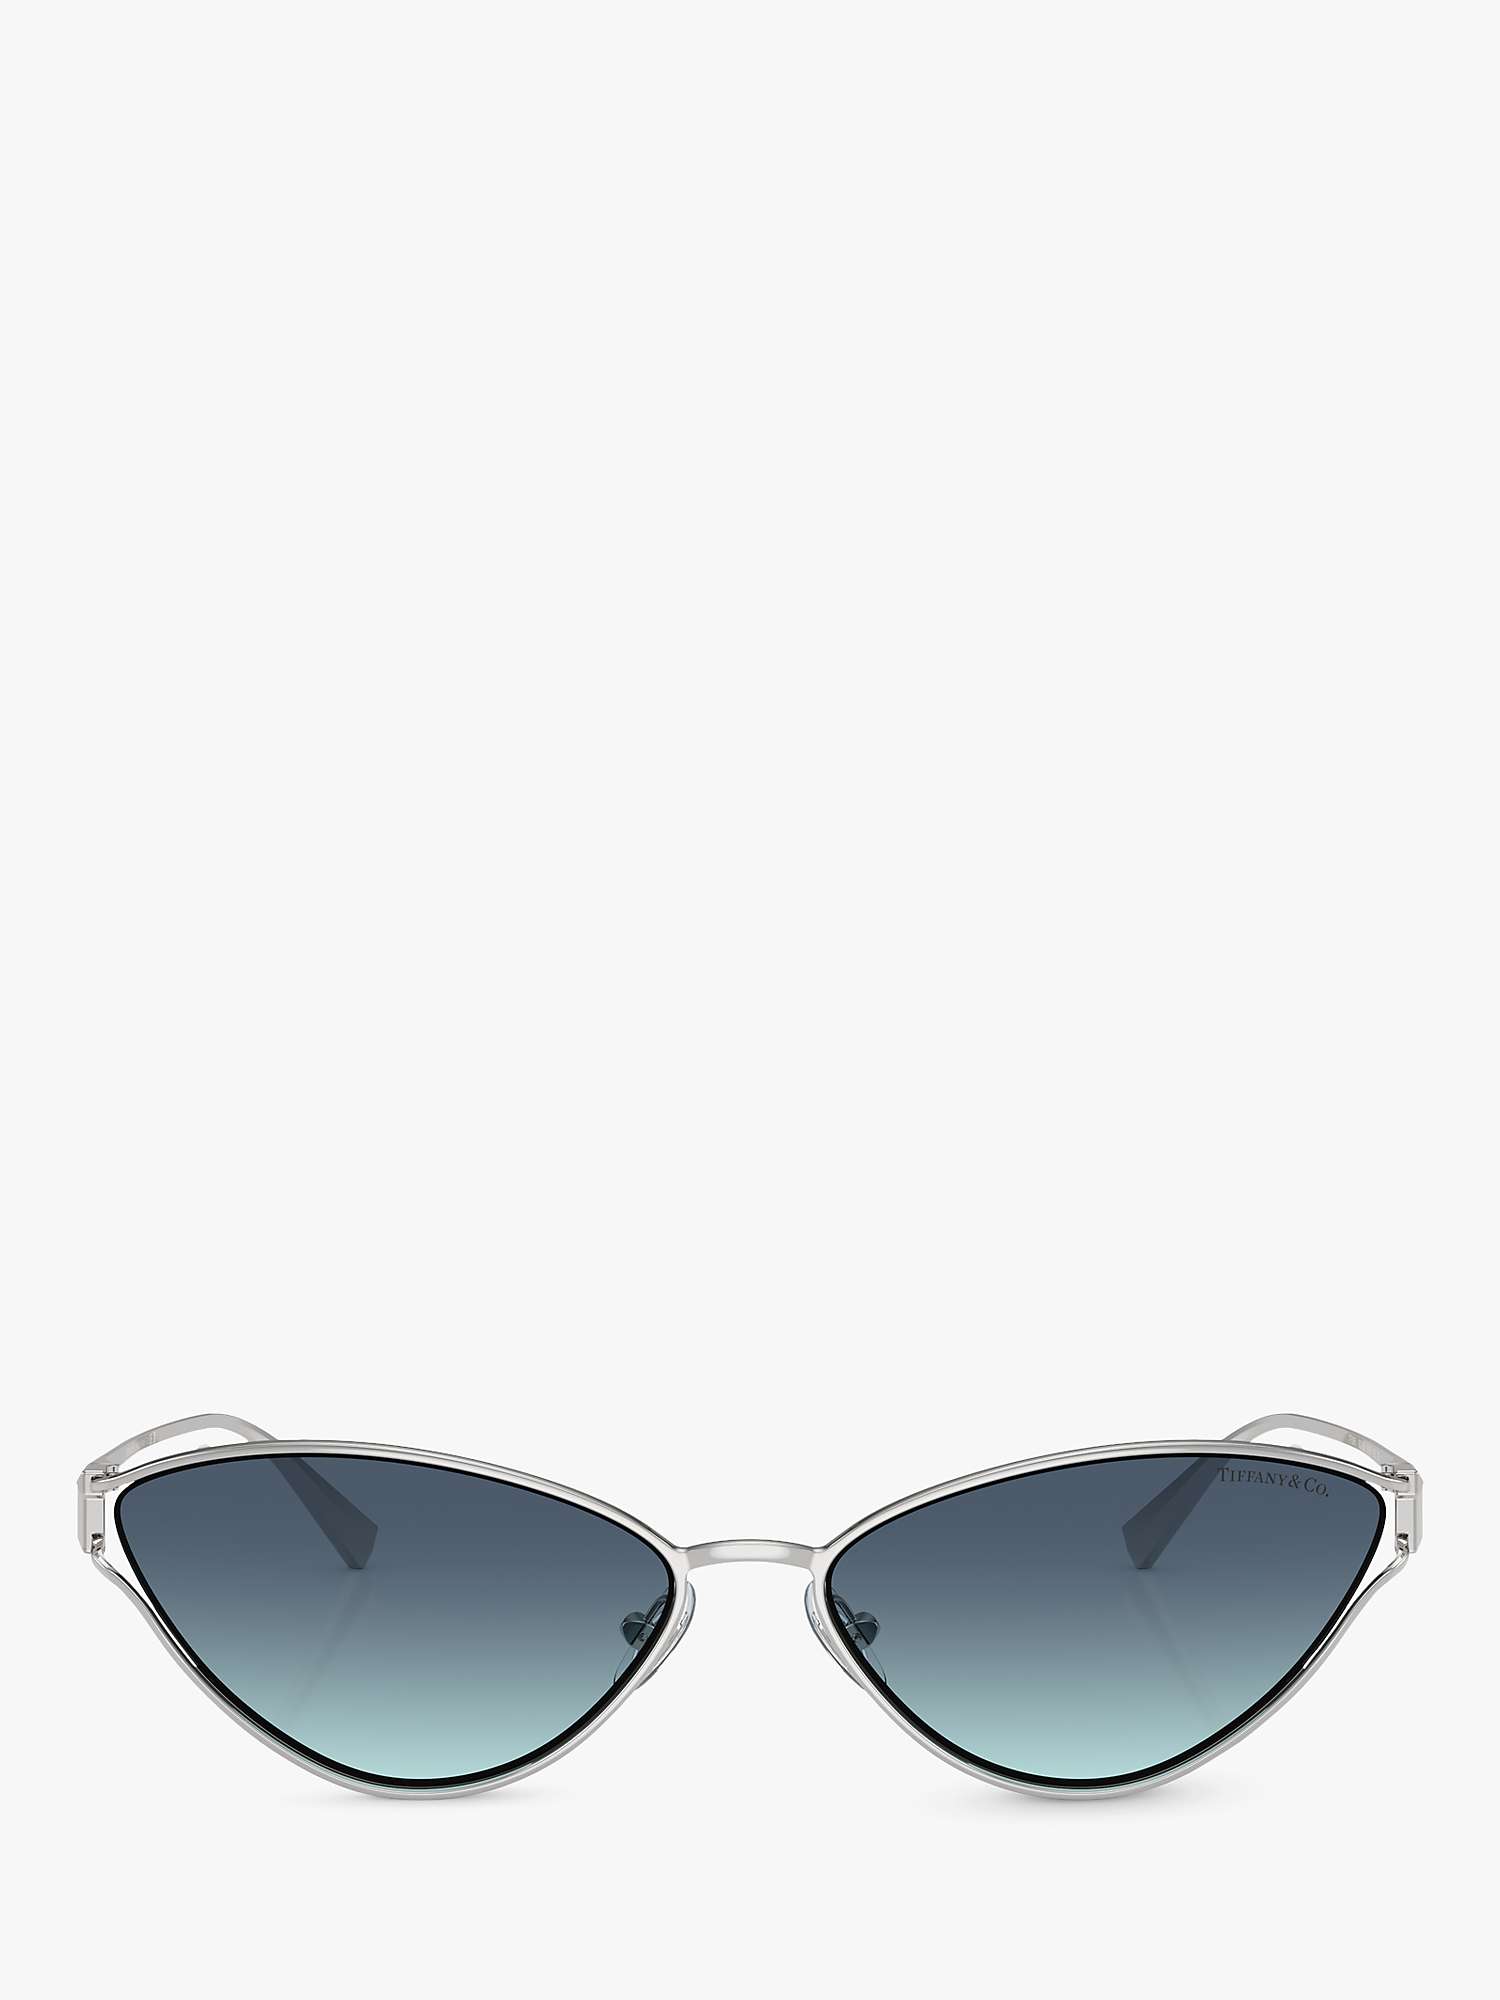 Buy Tiffany & Co TF3095 Women's Cat's Eye Sunglasses, Silver/Blue Gradient Online at johnlewis.com